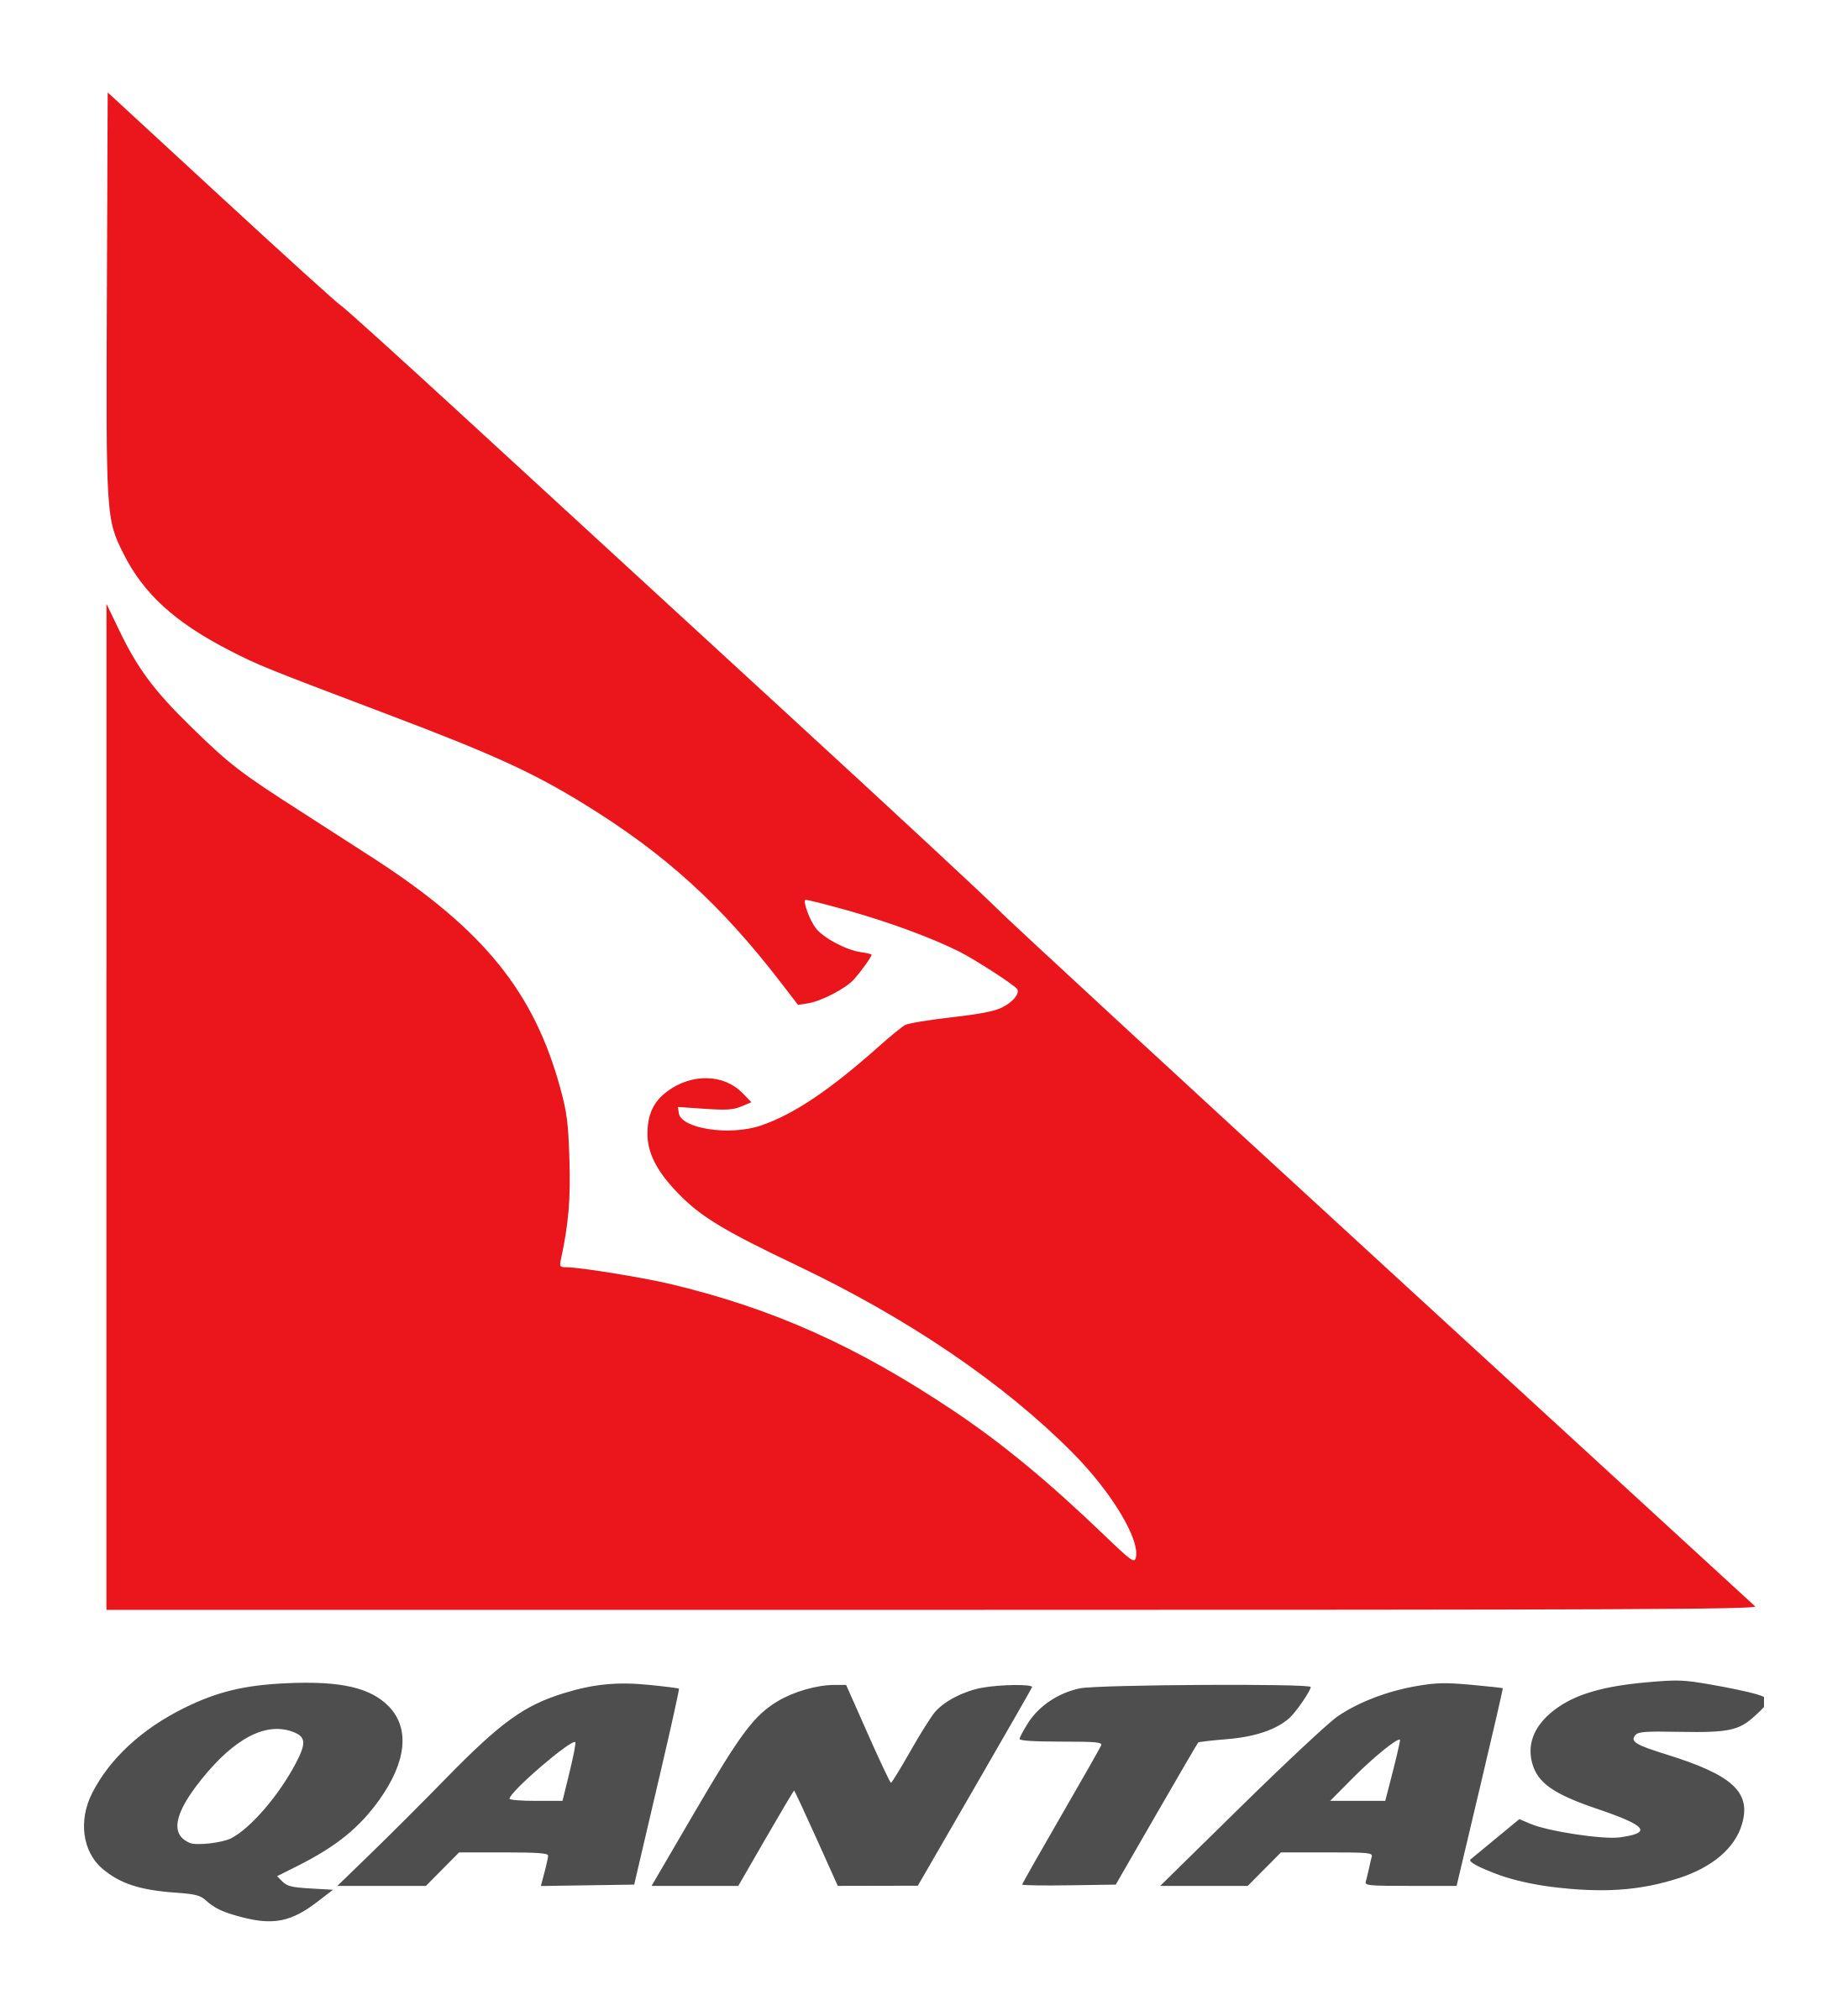 3 Red Triangle Logo - Qantas Logo, Qantas Symbol, Meaning, History and Evolution